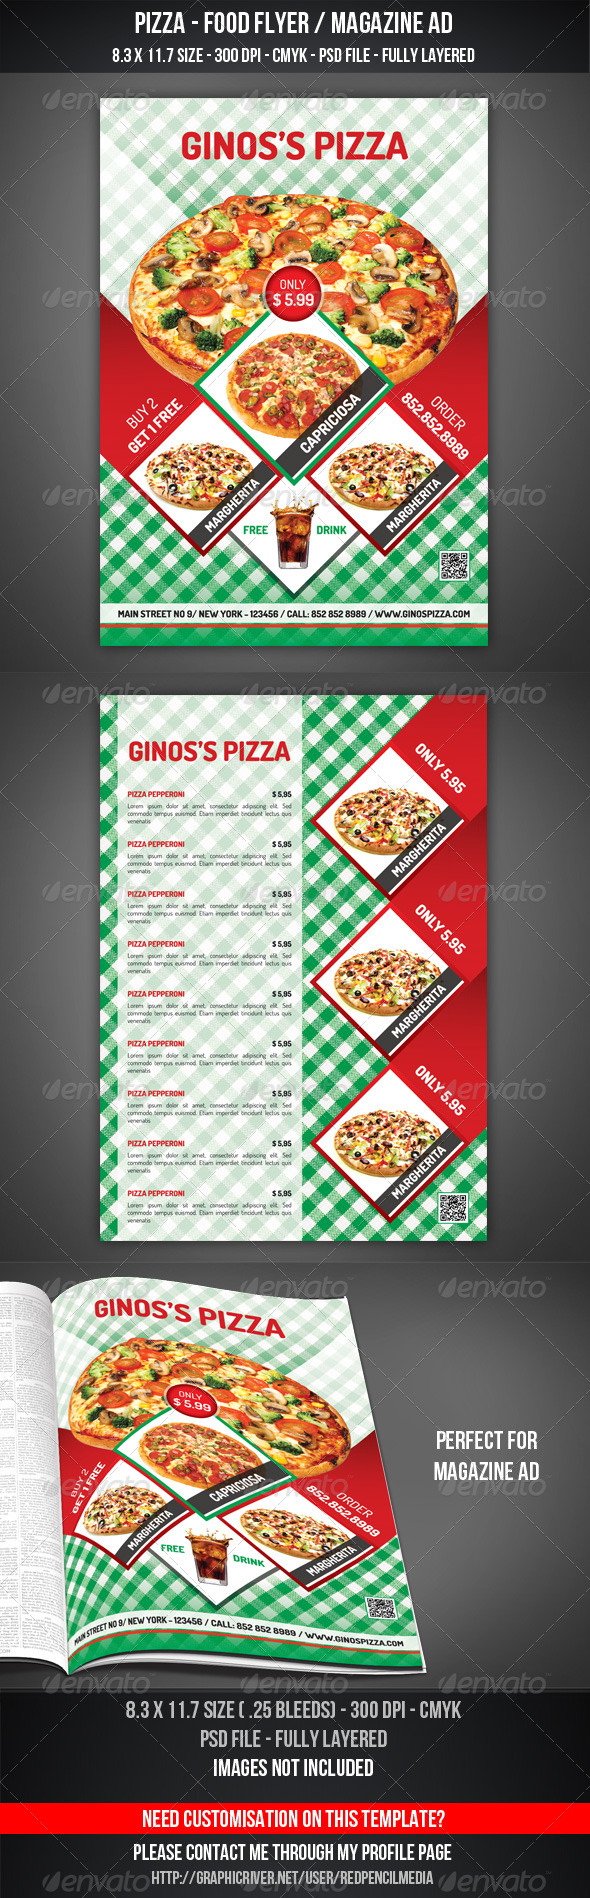 Pizza - Food Flyer / Magazine AD